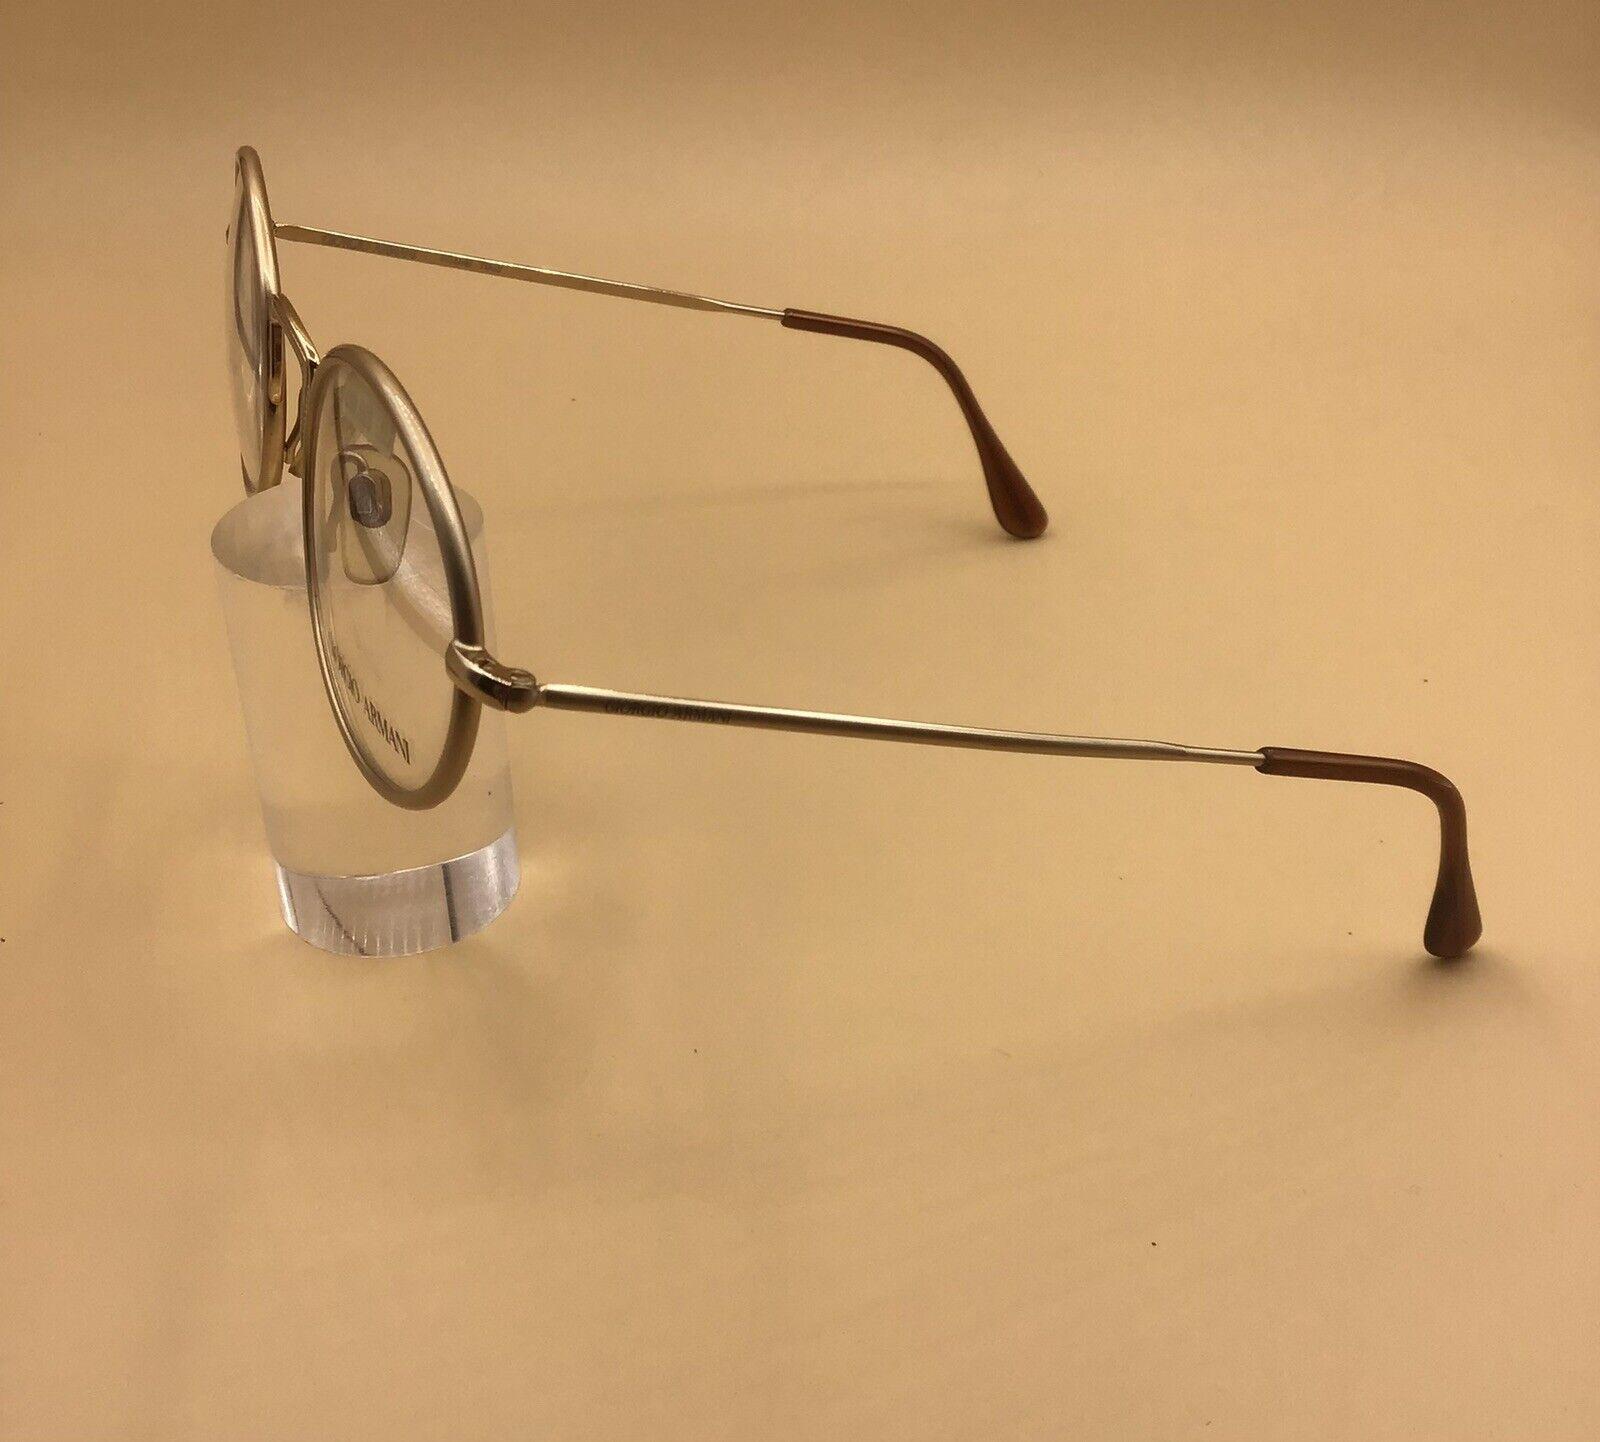 Giorgio Armani Occhiale Vintage Eyewear Frame Brillen Lunettes